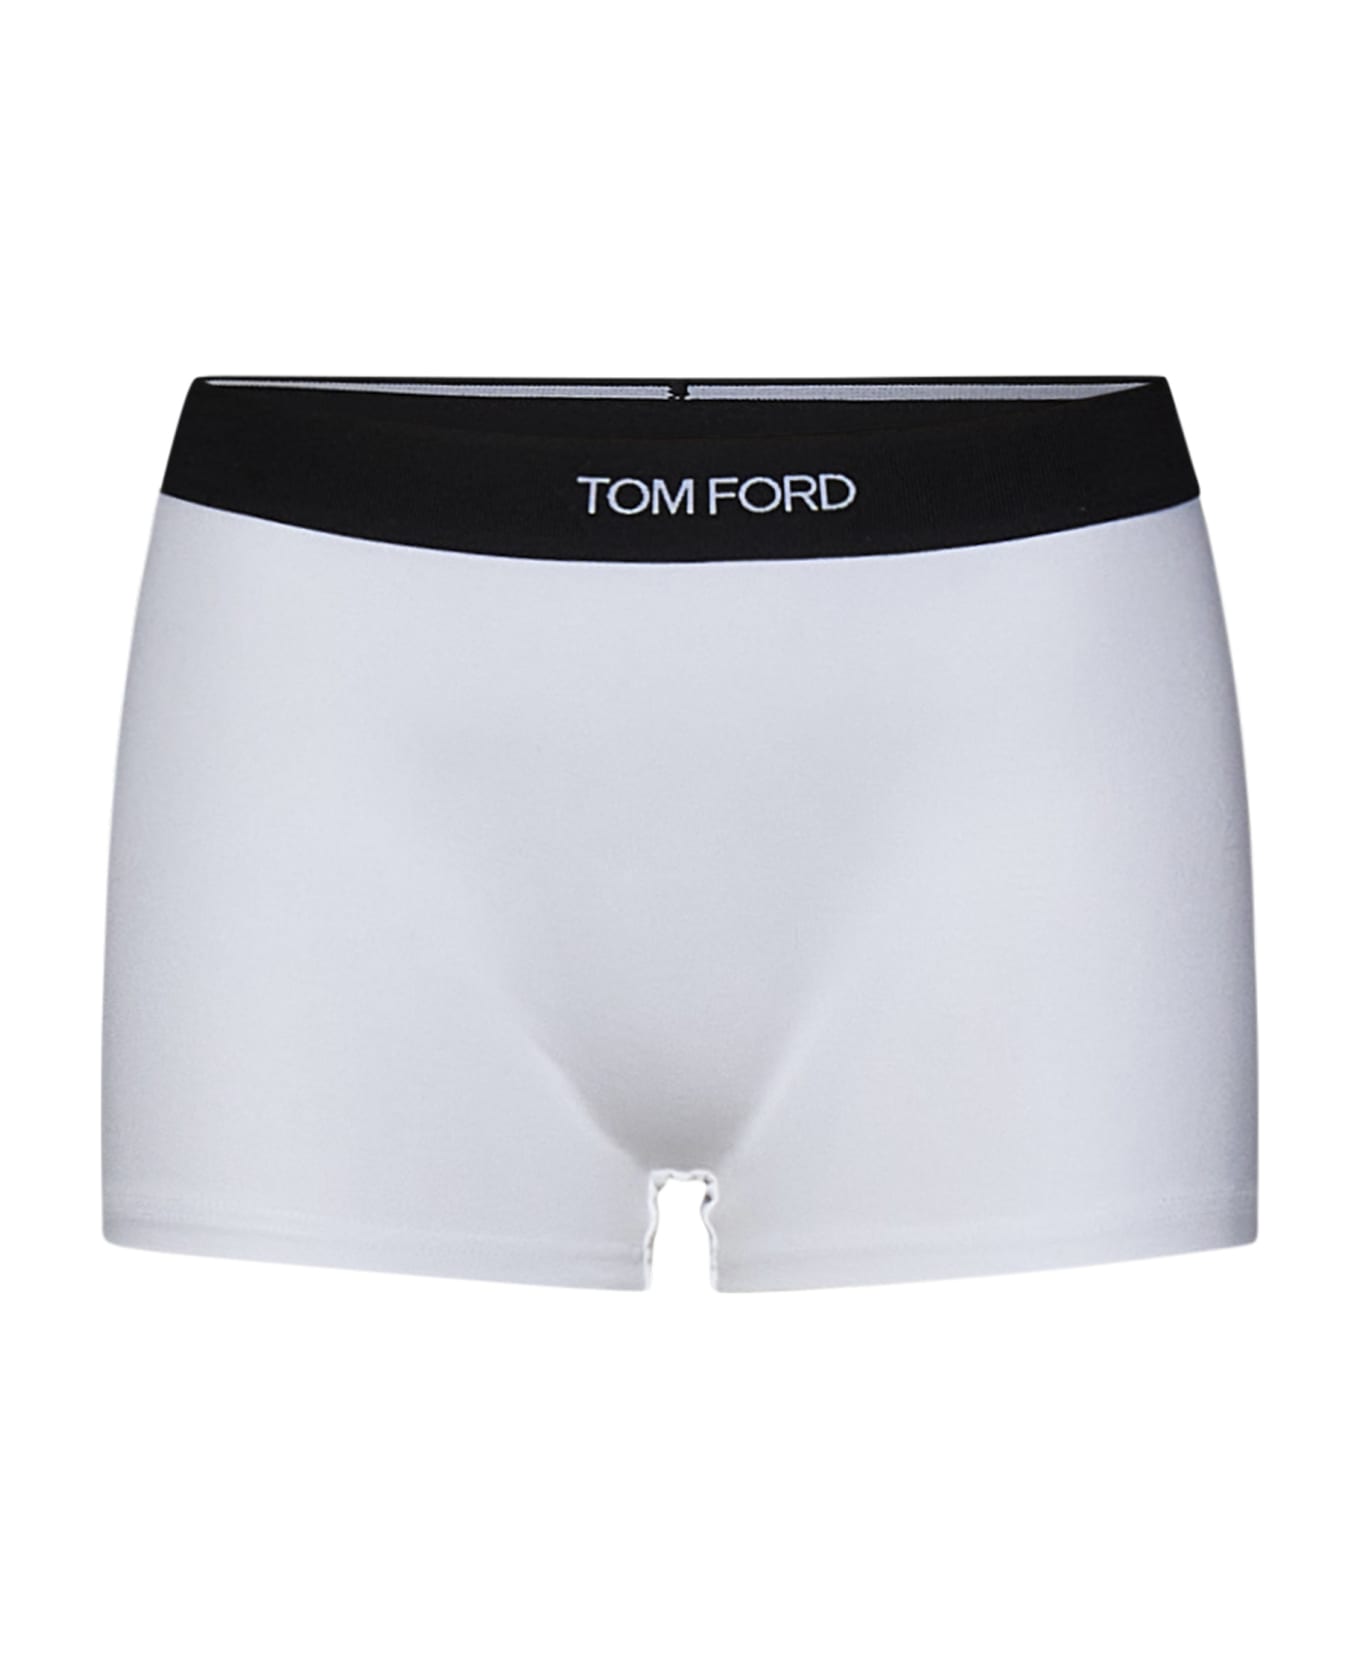 Tom Ford Bottom - White